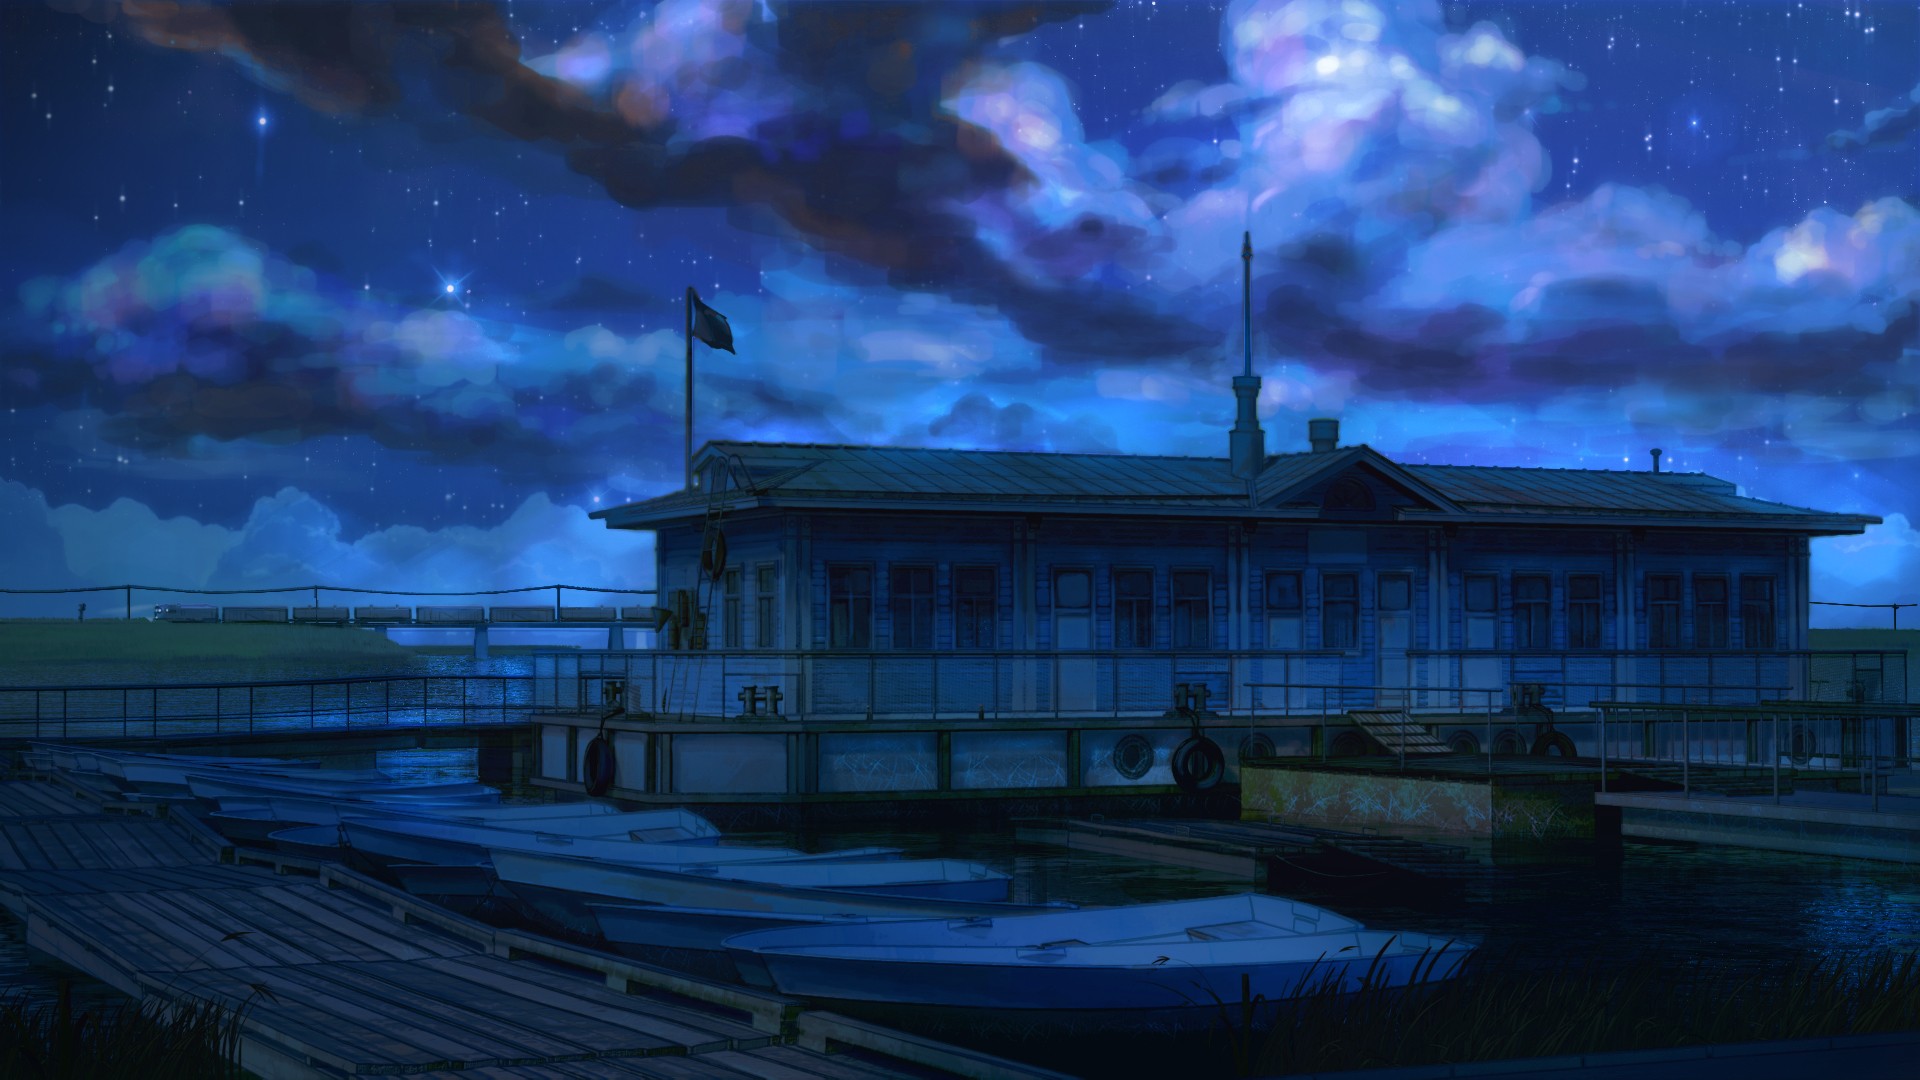 Anime 1920x1080 ArseniXC Everlasting Summer (visual novel) boat clouds night flag pier blue anime house sky stars vehicle outdoors